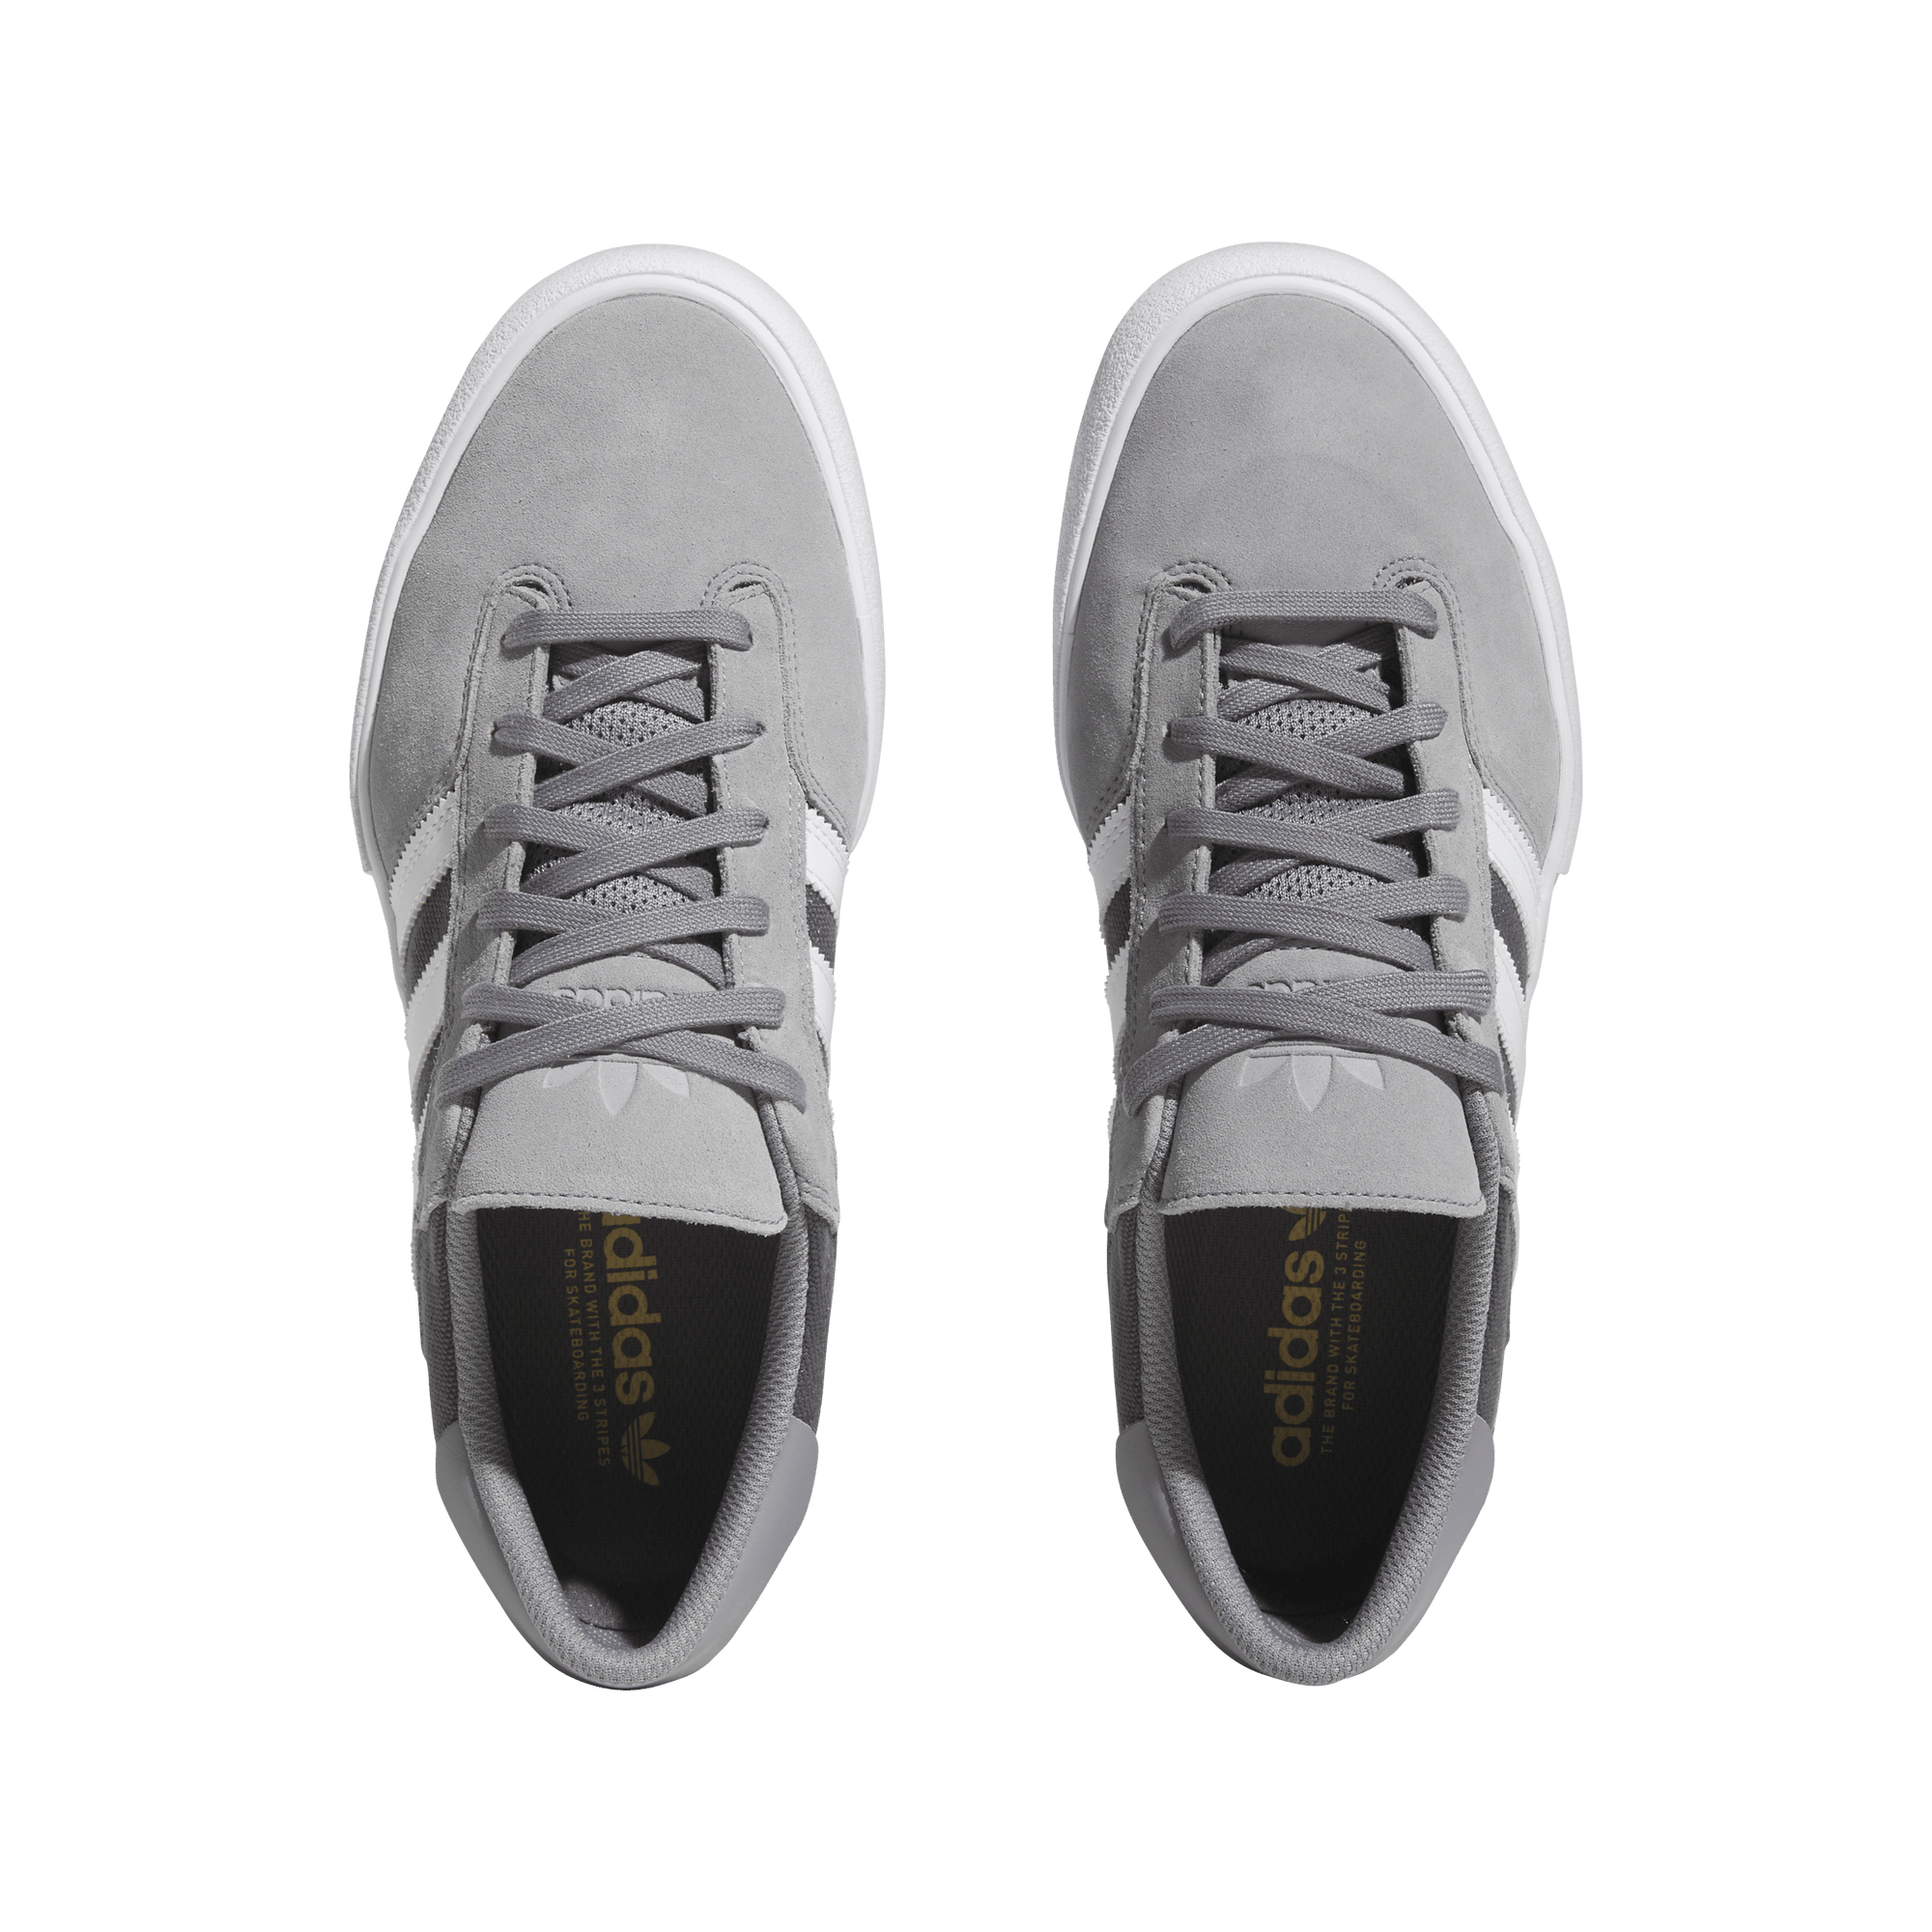 ADIDAS Matchbreak Super Shoes Grey Three/Grey Five/Cloud White Men's Skate Shoes Adidas 